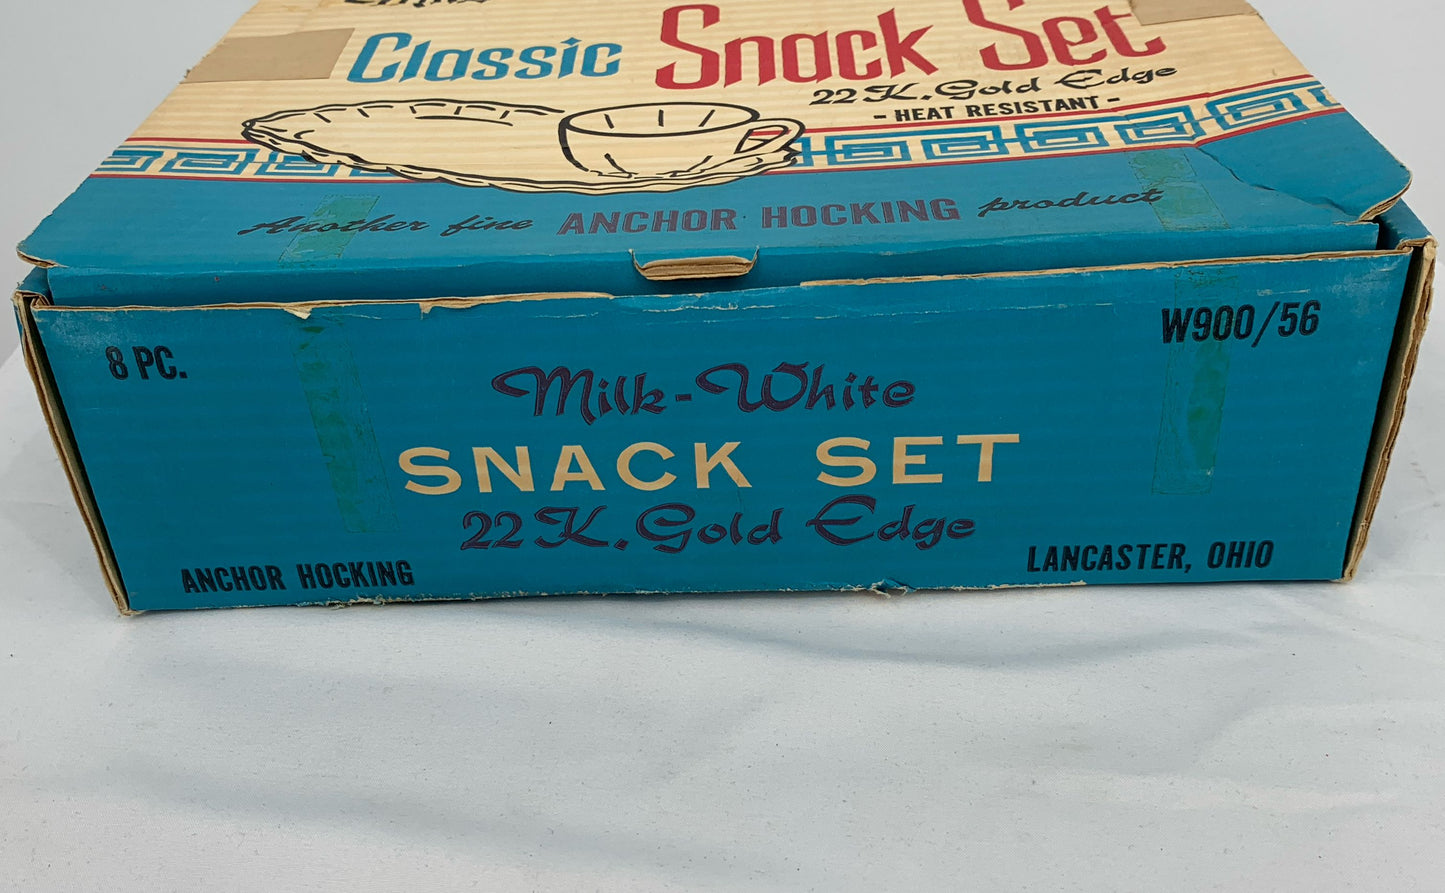 Vintage Anchor Hocking 8 Piece Classic Snack Set 22k Gold Edge-With Original Box